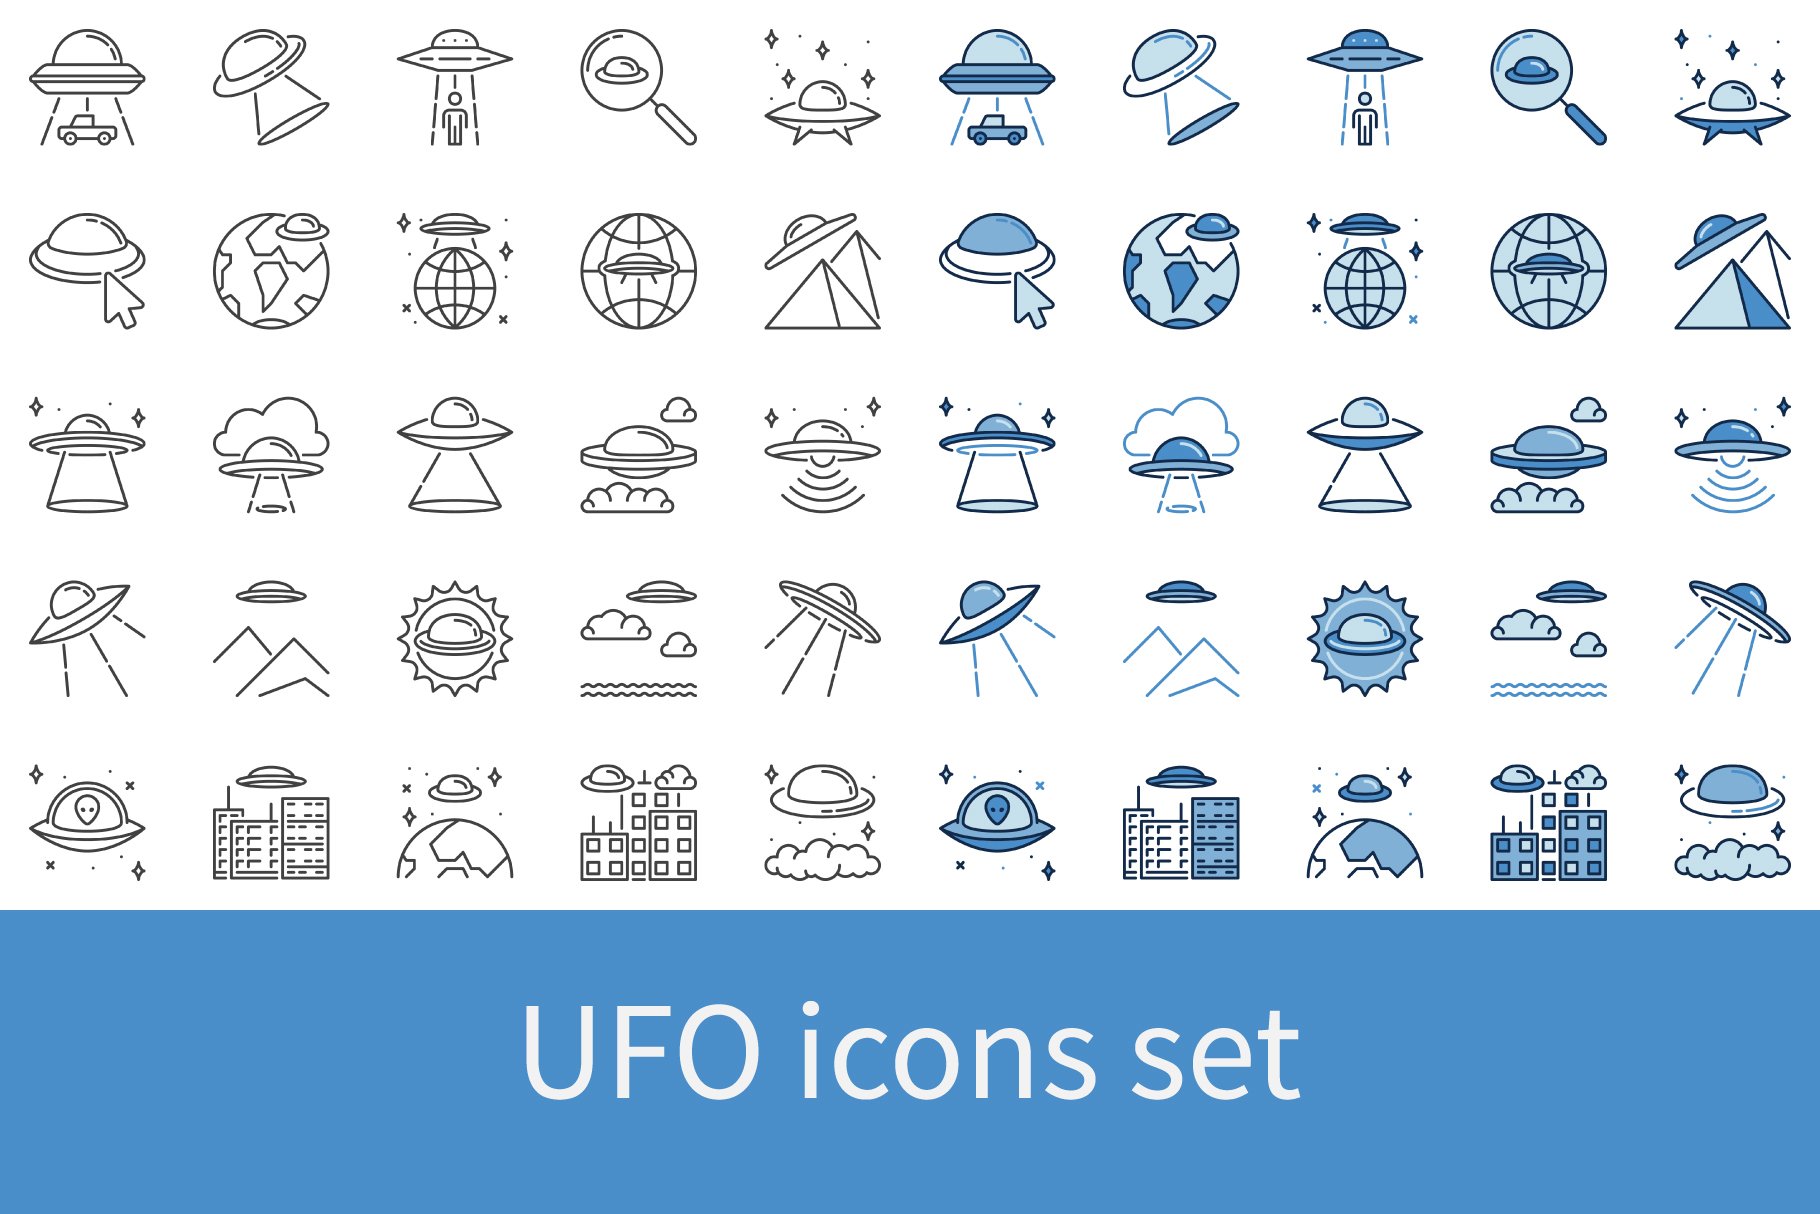 UFO icons set cover image.